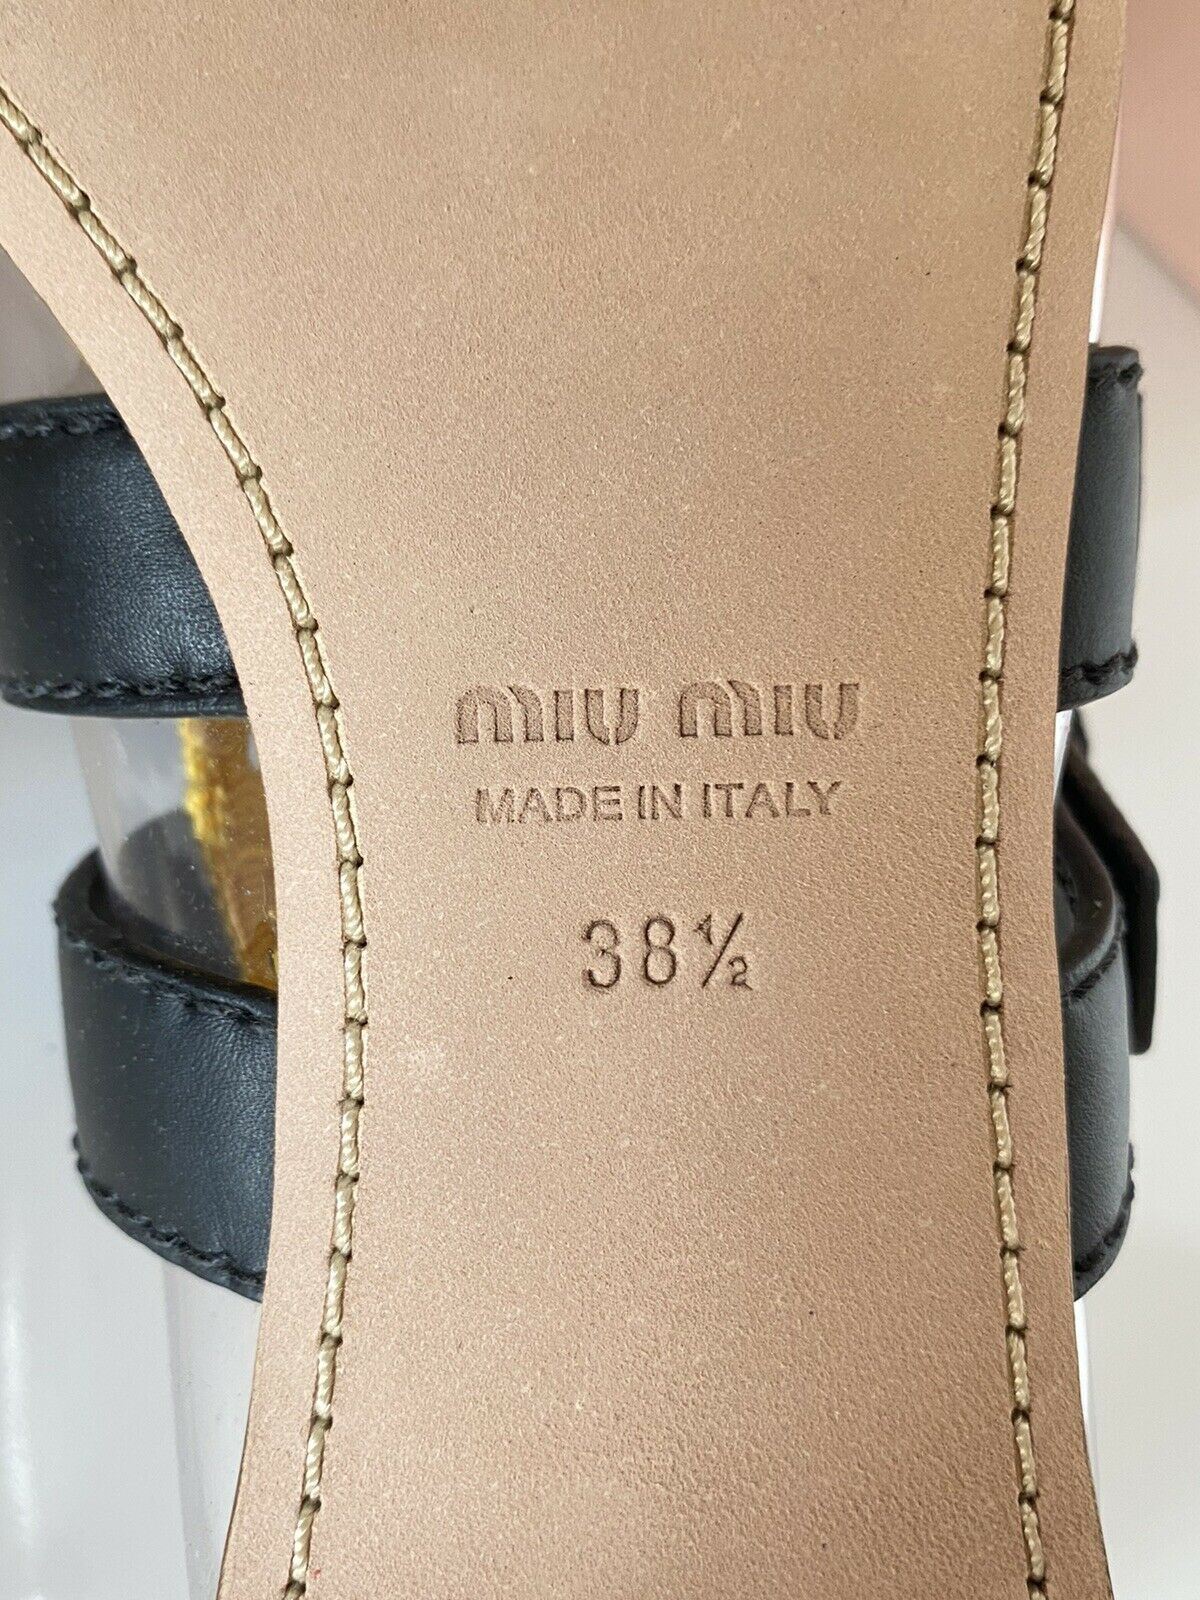 NIB MIU MIU Transparent & Yellow Double Bands Women's Sandal 8.5 US 5F366C Italy